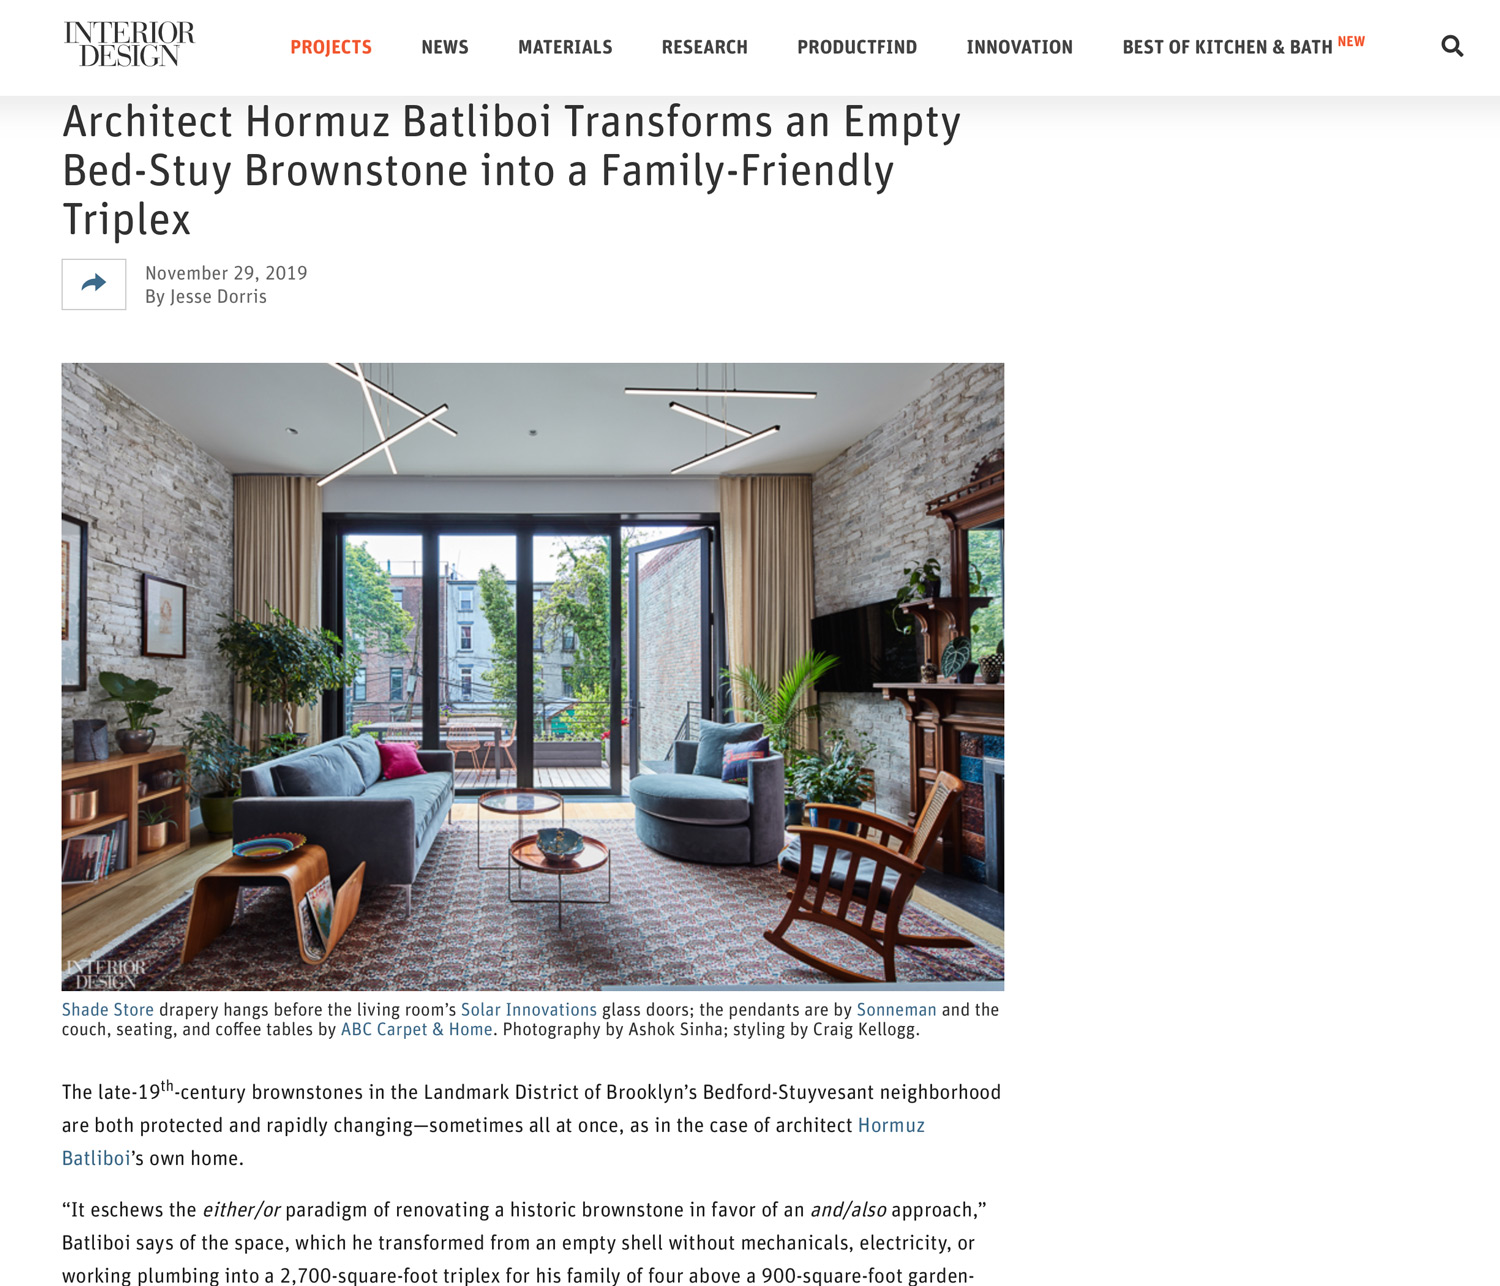 Interior Design Hormuz Batliboi Transforms an Empty Bed-Stuy Brownstone into a Family-Friendly Triplex